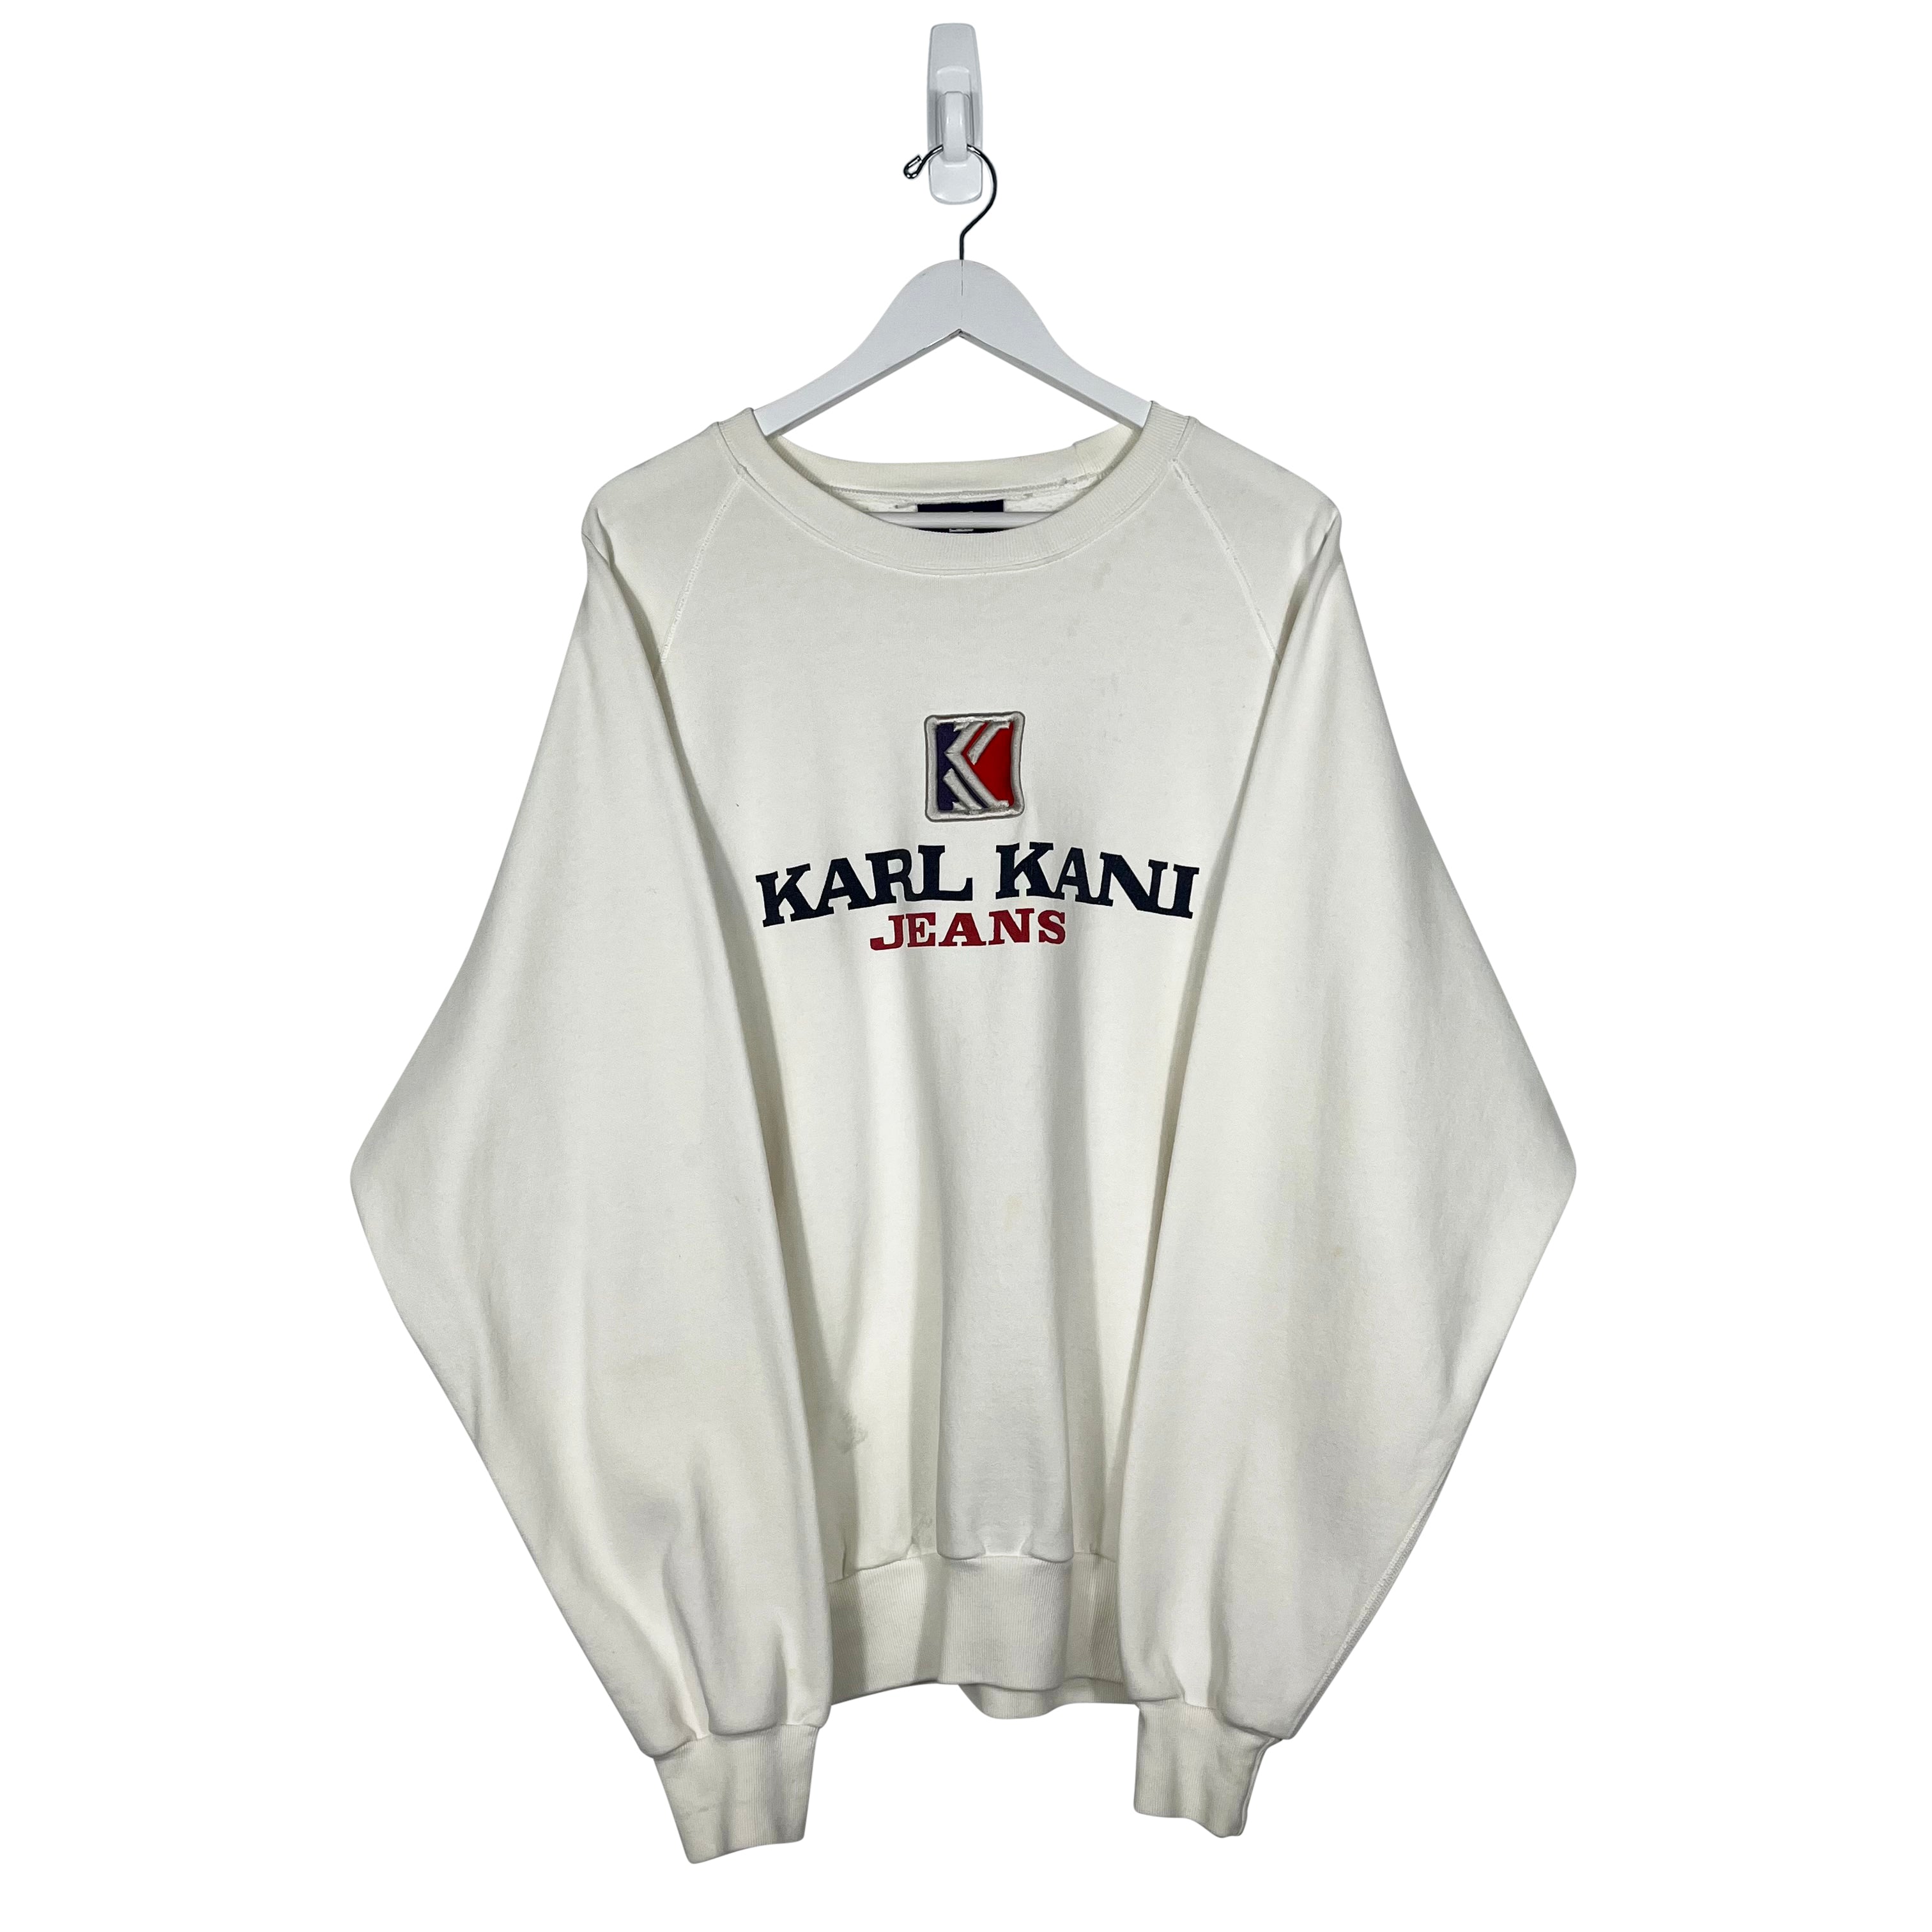 Vintage Rare Karl Kani Jeans Embroidered Crewneck Sweatshirt - Men's XL